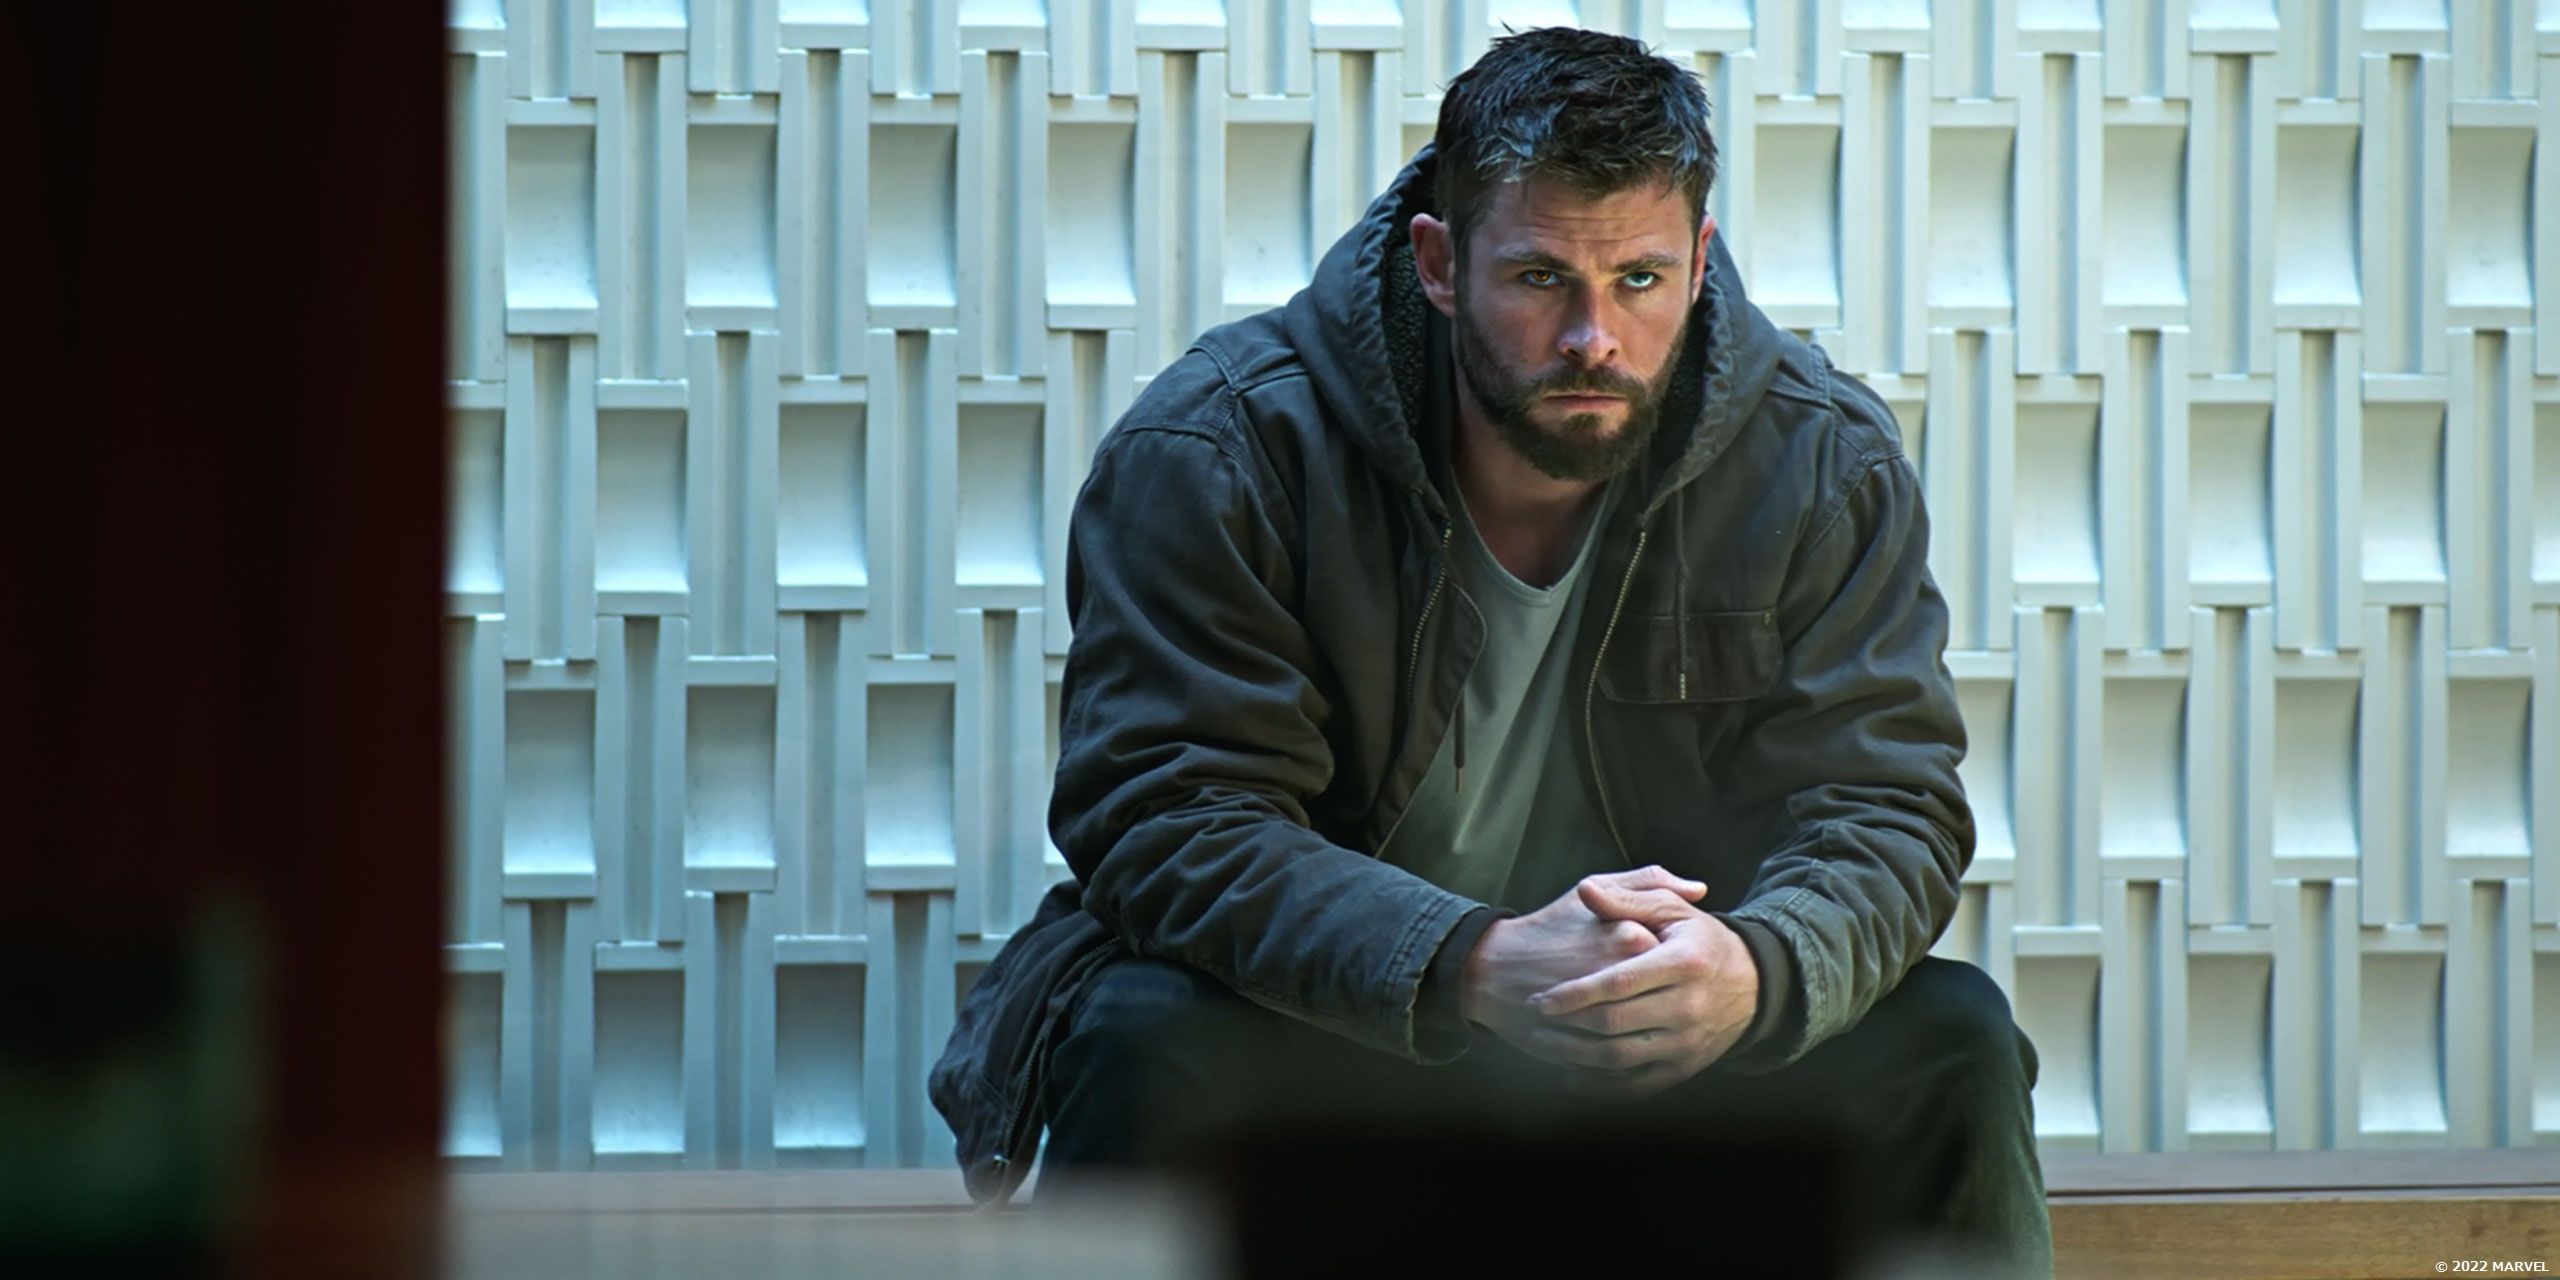 Thor sitting alone in Avengers Endgame